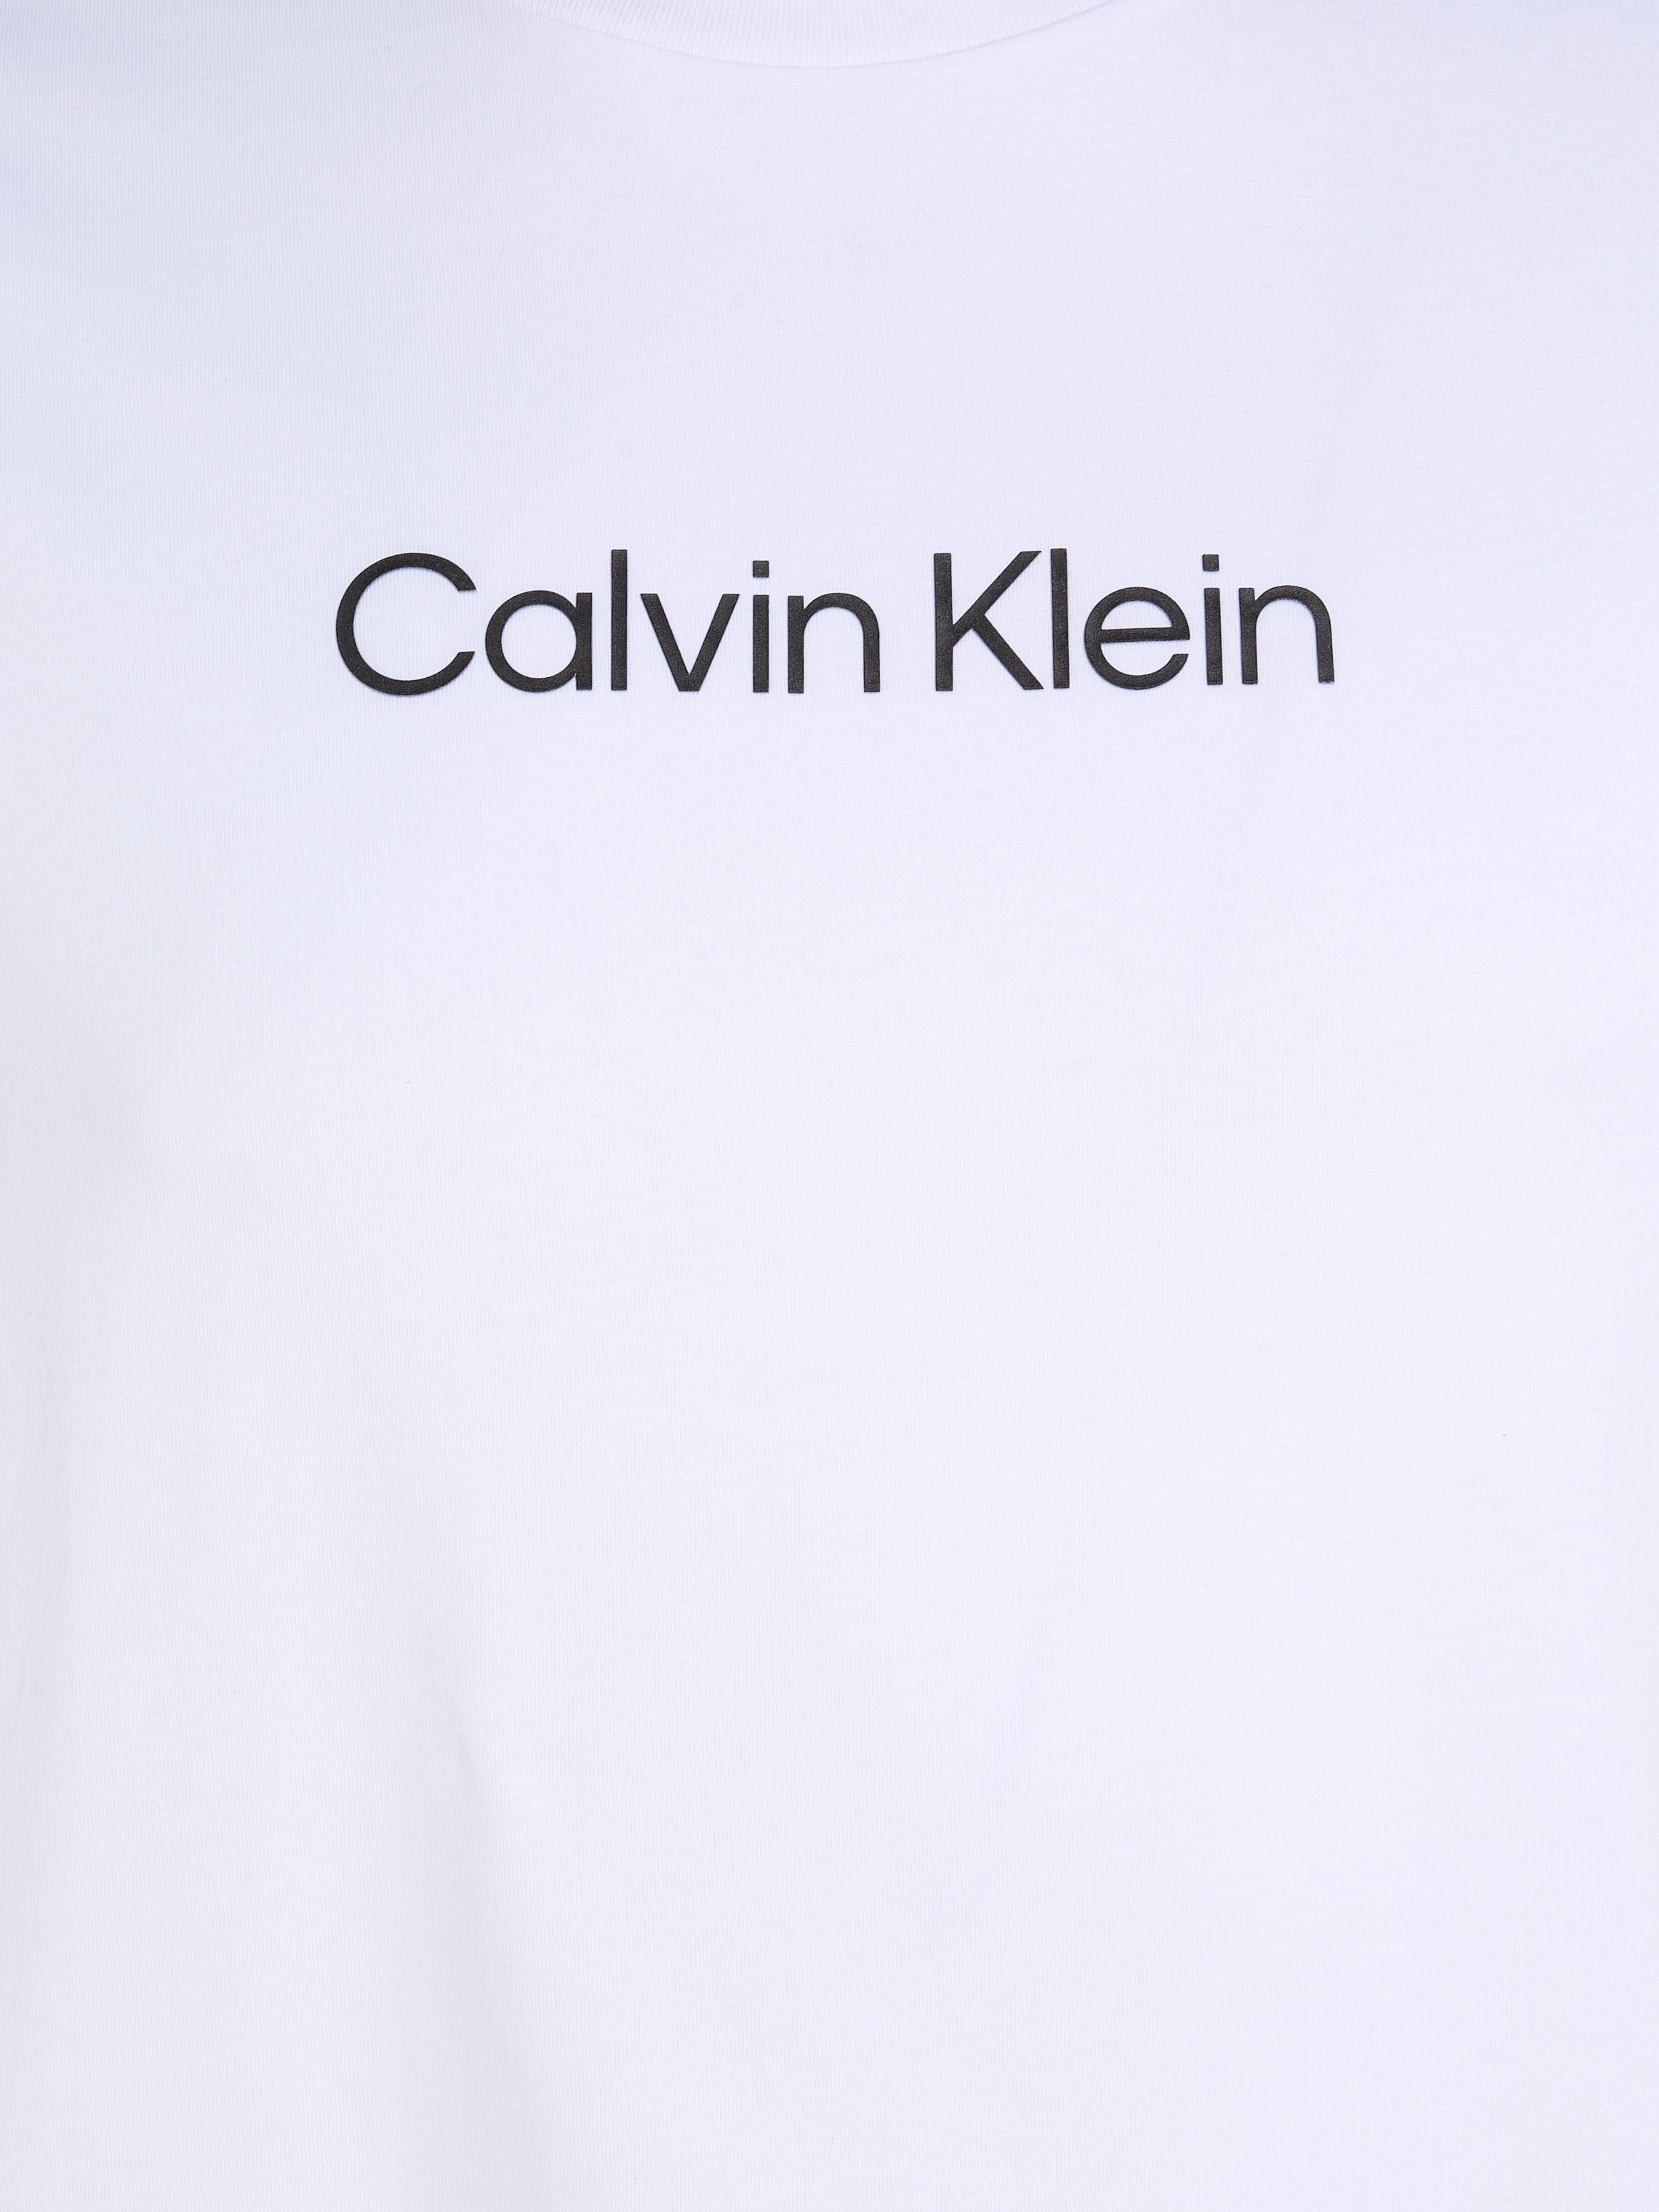 Calvin Klein White T-SHIRT Bright BT-HERO Big&Tall T-Shirt COMFORT LOGO